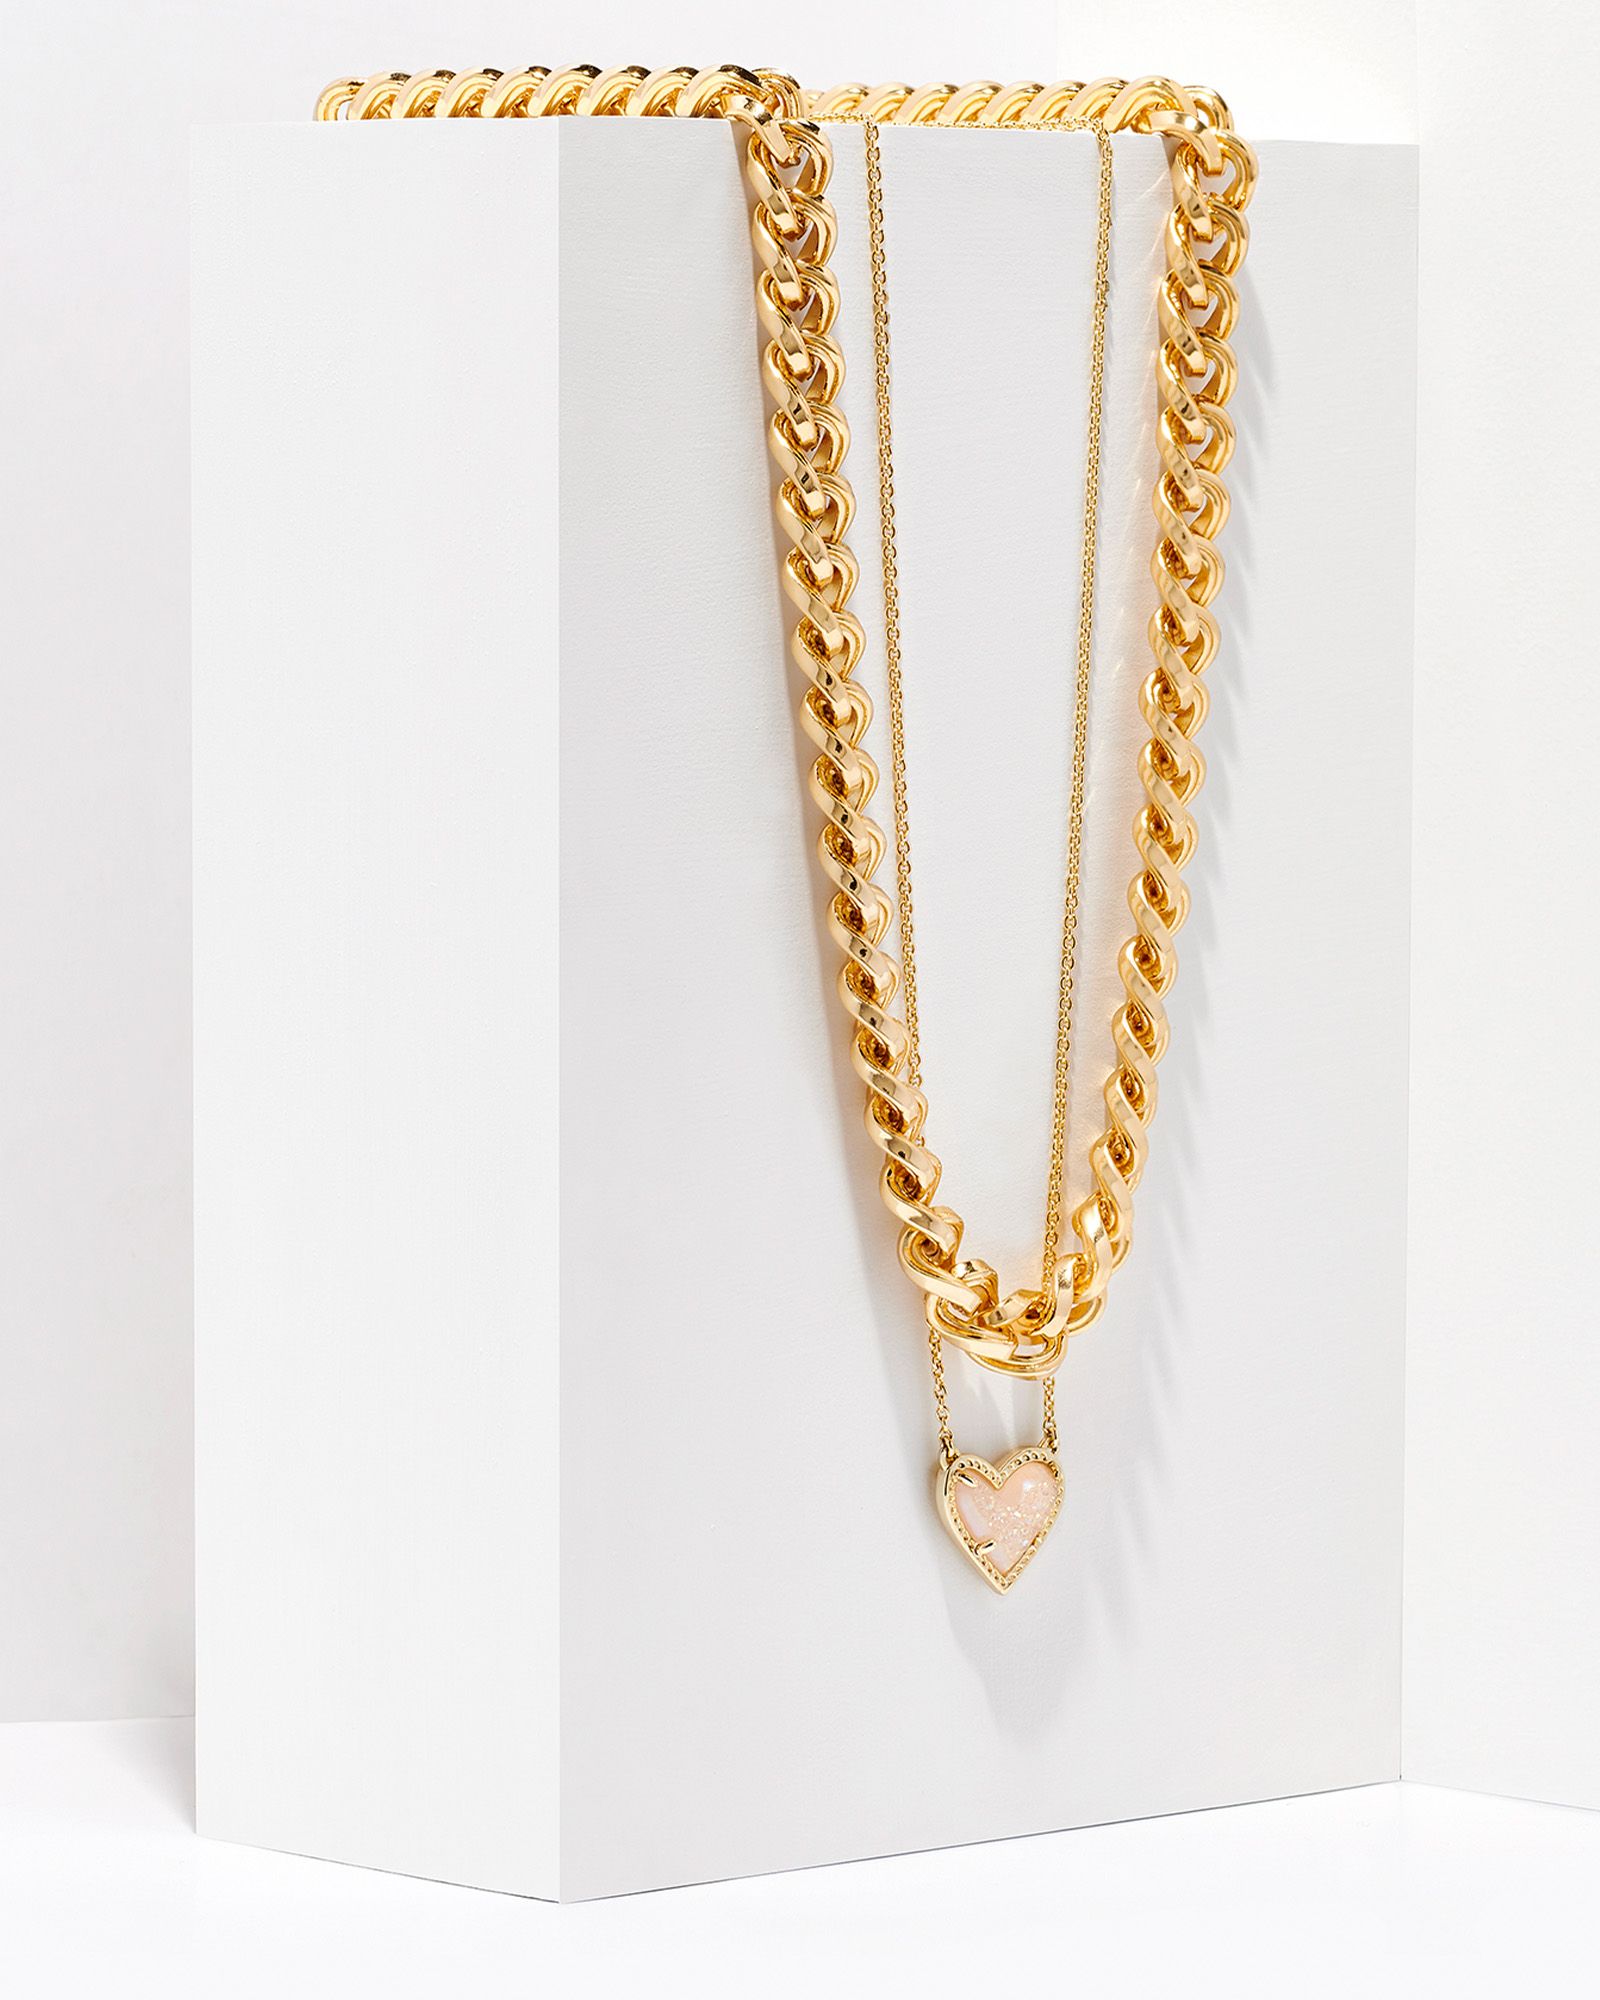 Ari Heart Necklace Layering Set in Gold | Kendra Scott | Kendra Scott